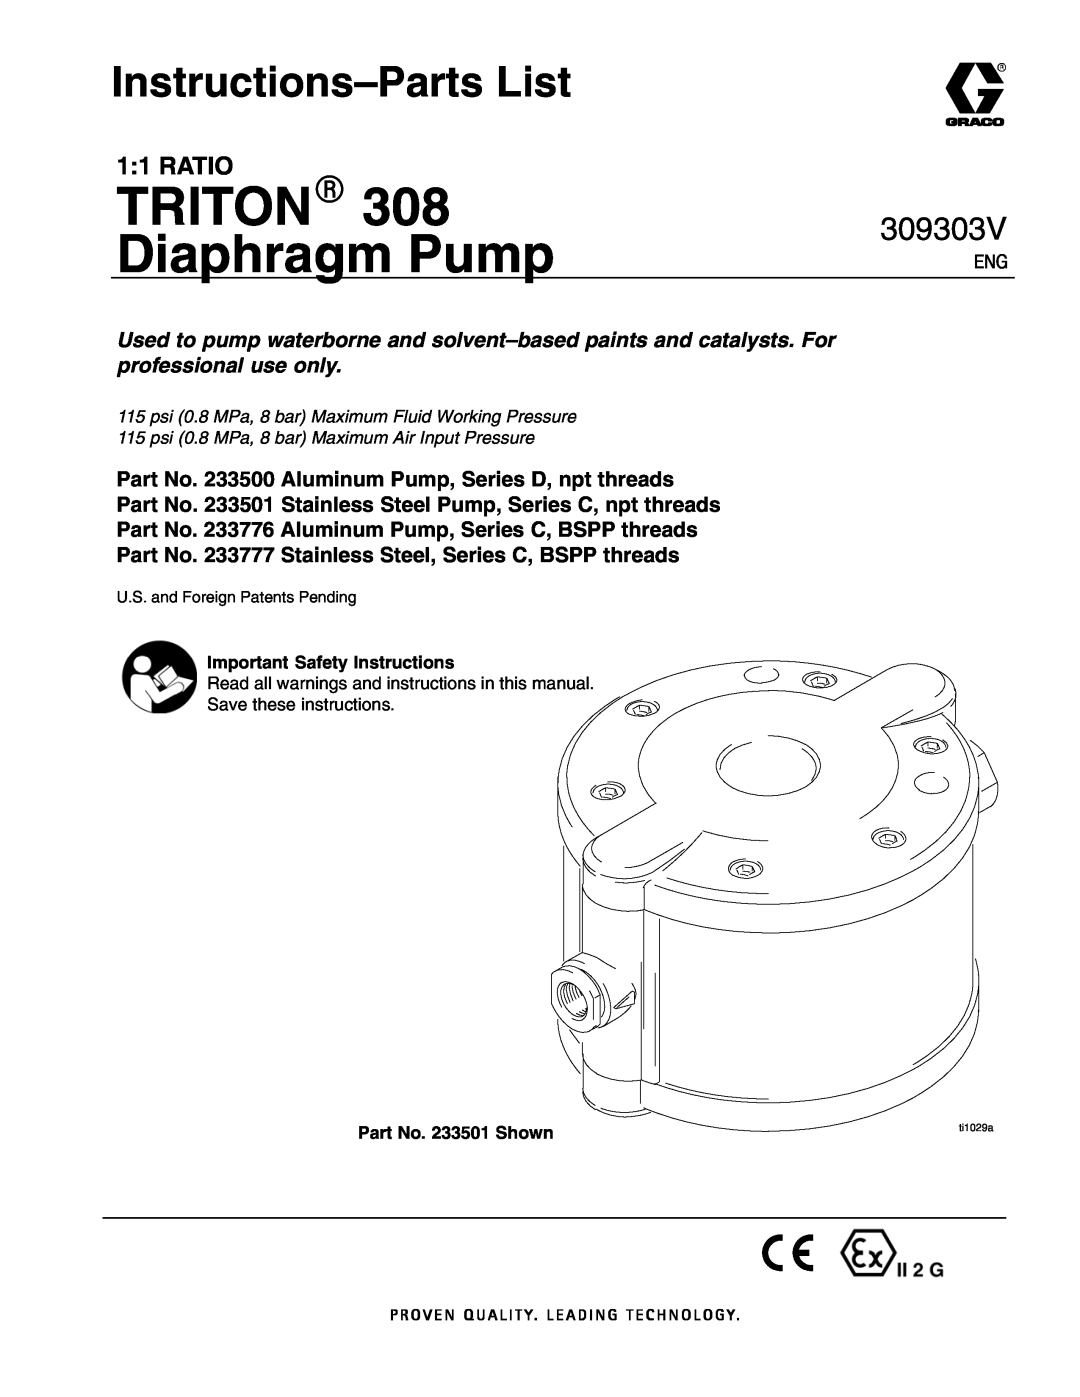 Graco 233500, 233776 important safety instructions Instructions-PartsList, Tritonr, Diaphragm Pump, 309303V, 1 1 RATIO 